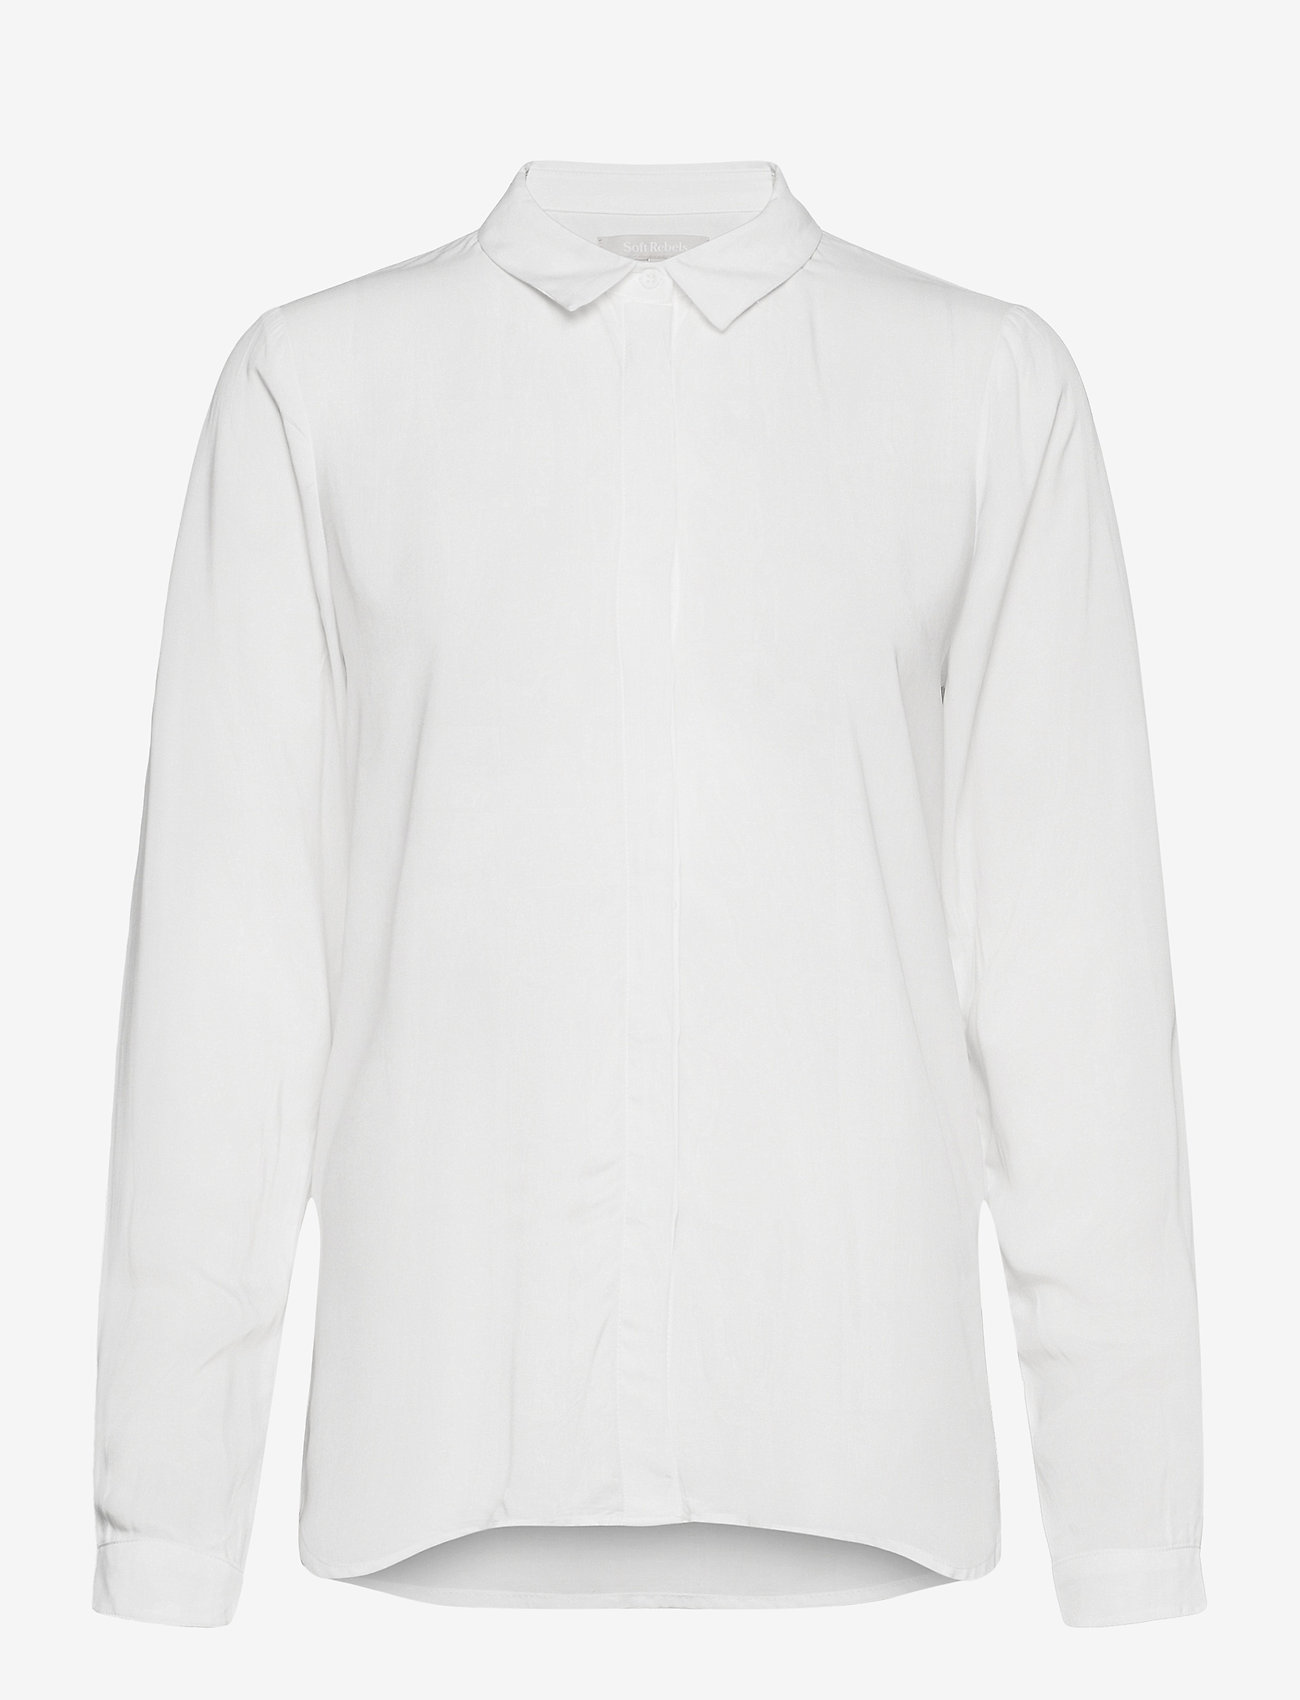 Soft Rebels - SRFreedom LS Shirt - chemises à manches longues - snow white / off white - 1